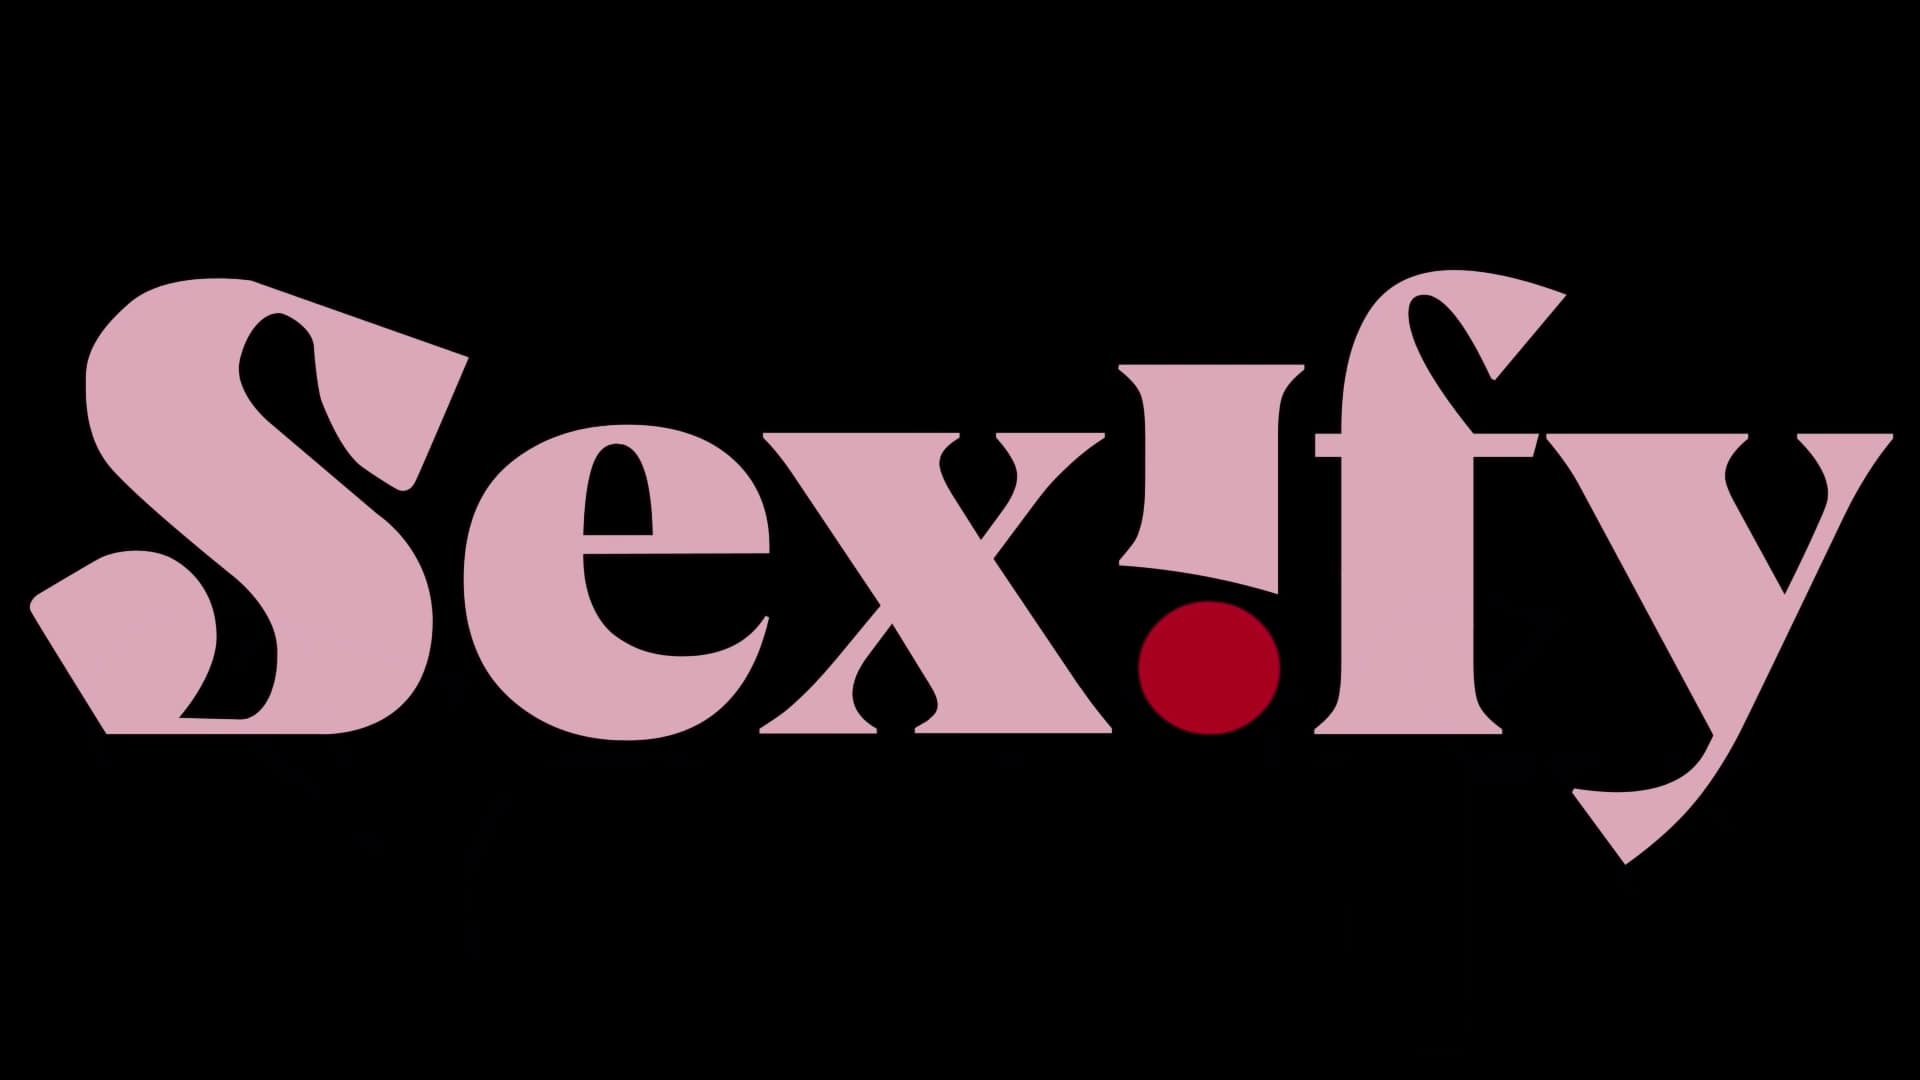 Netflix Sexify Trailer, Netflix Comedy Series, Coming to Netflix in April 2021